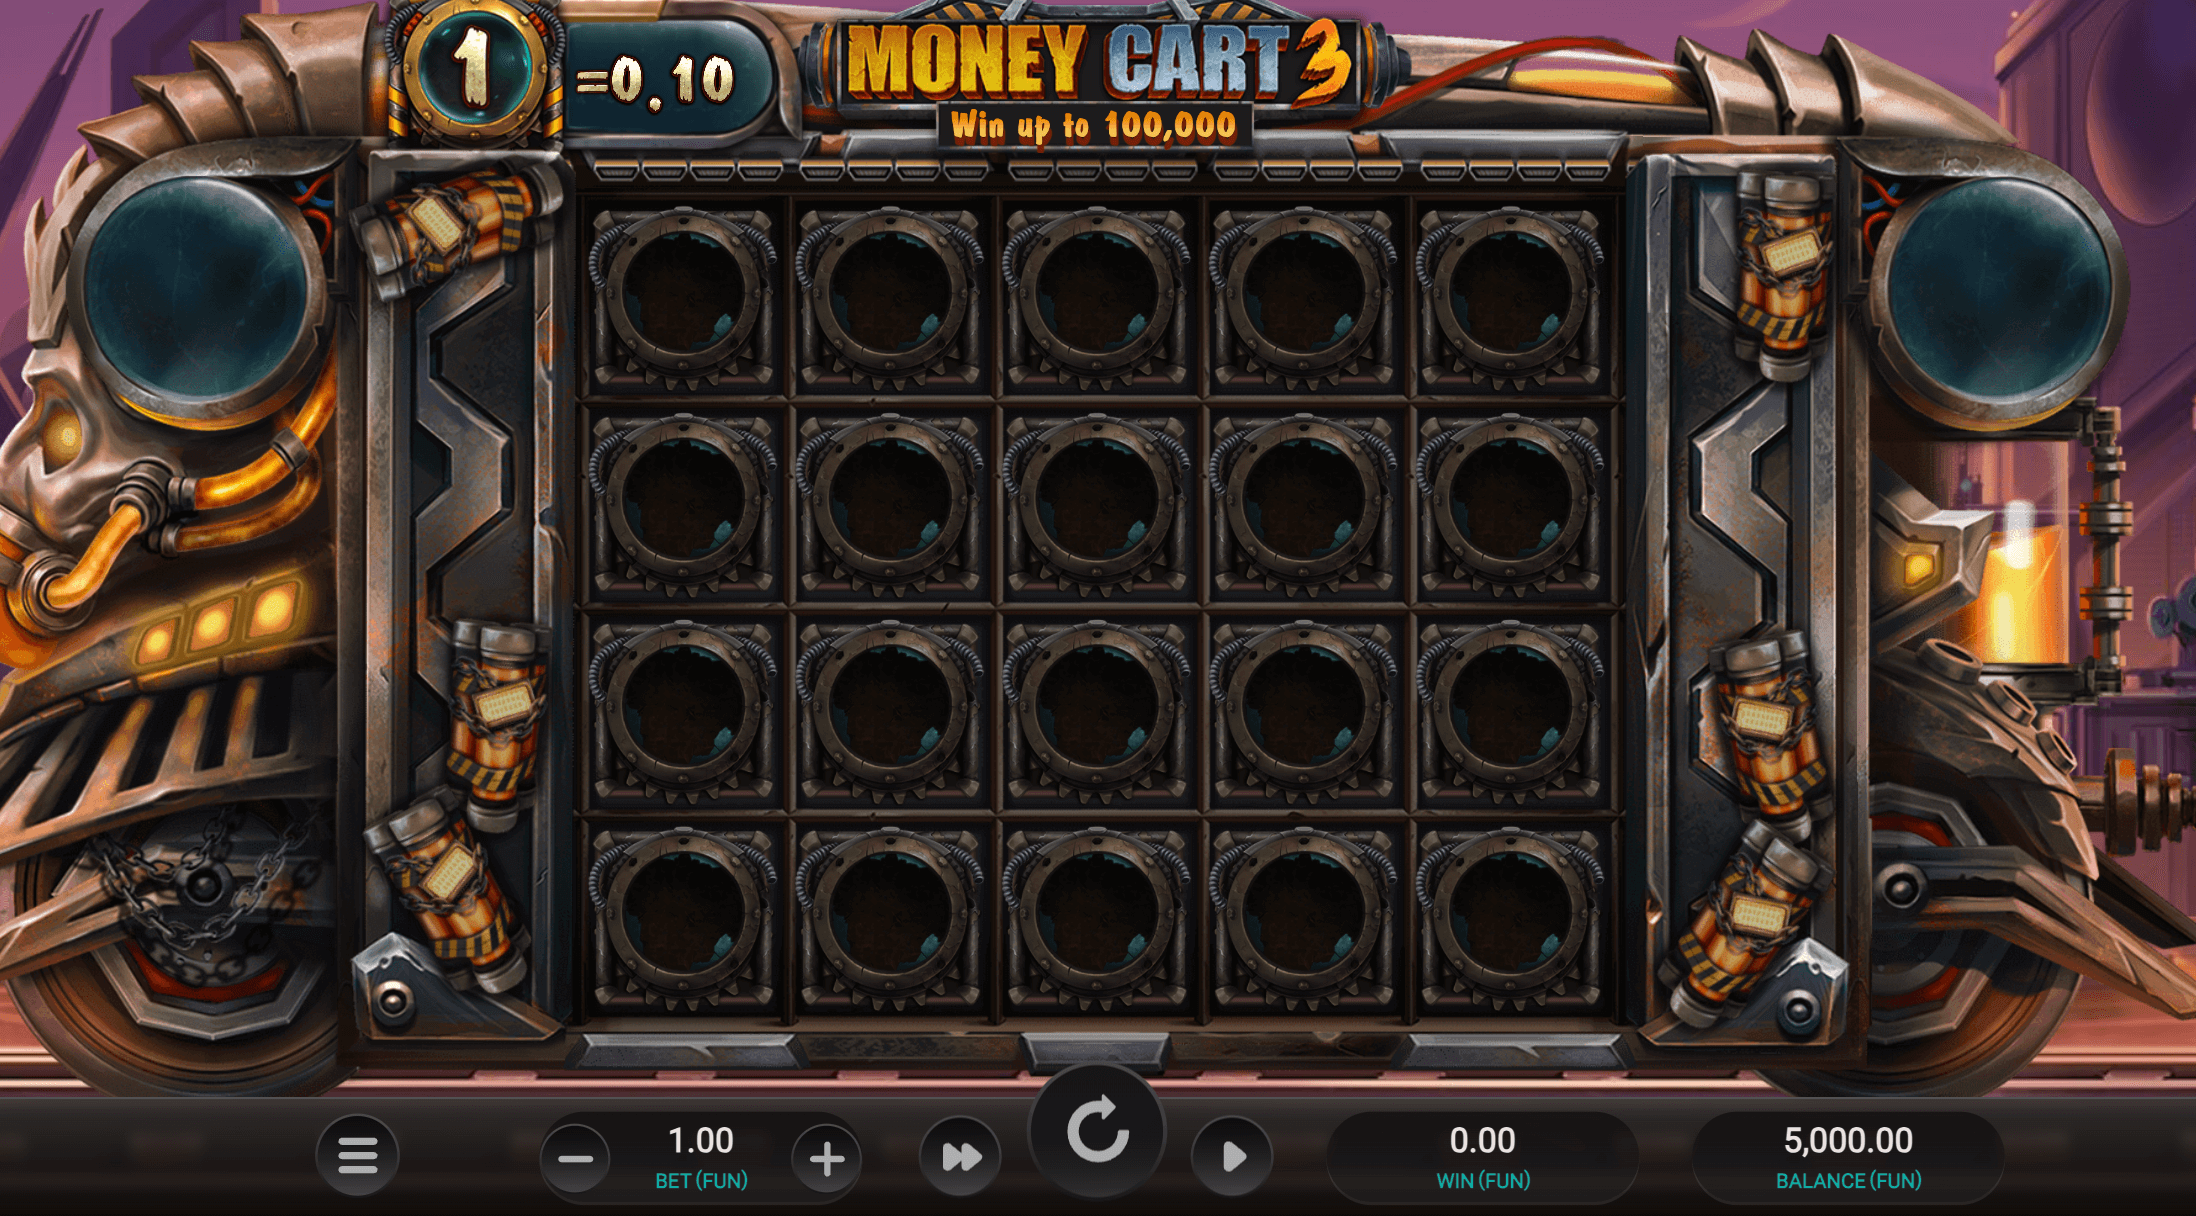 Money Cart 3 Relaxgaming Joker game 123